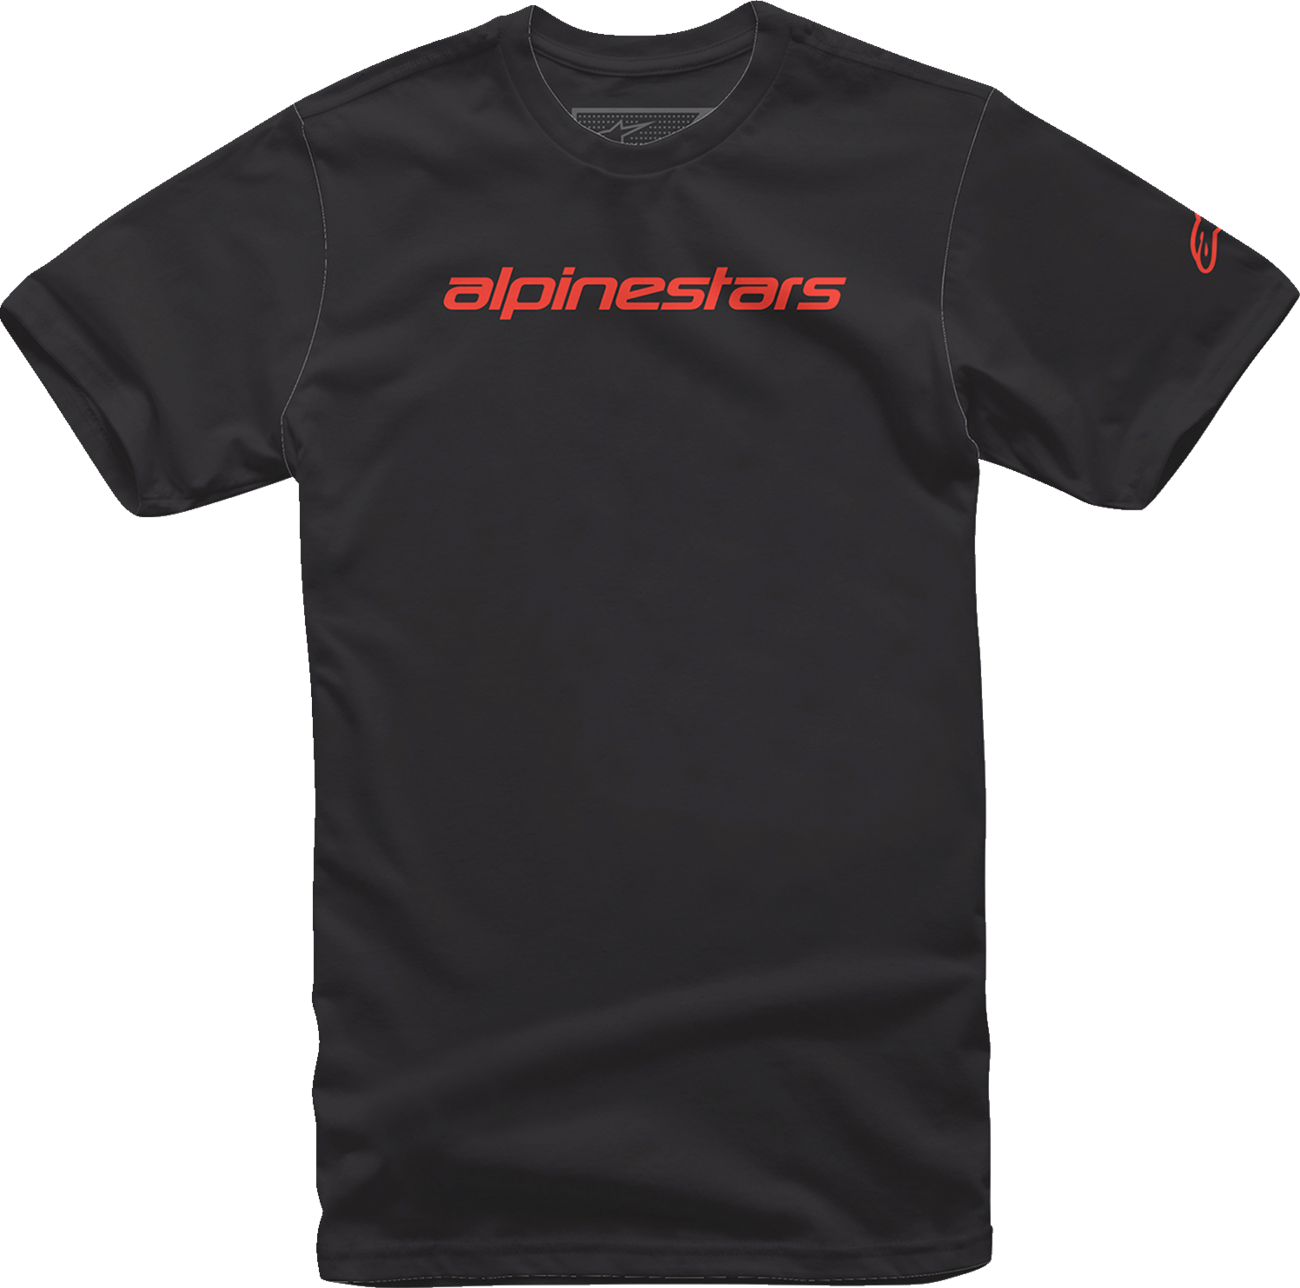 ALPINESTARS Linear Wordmark T-Shirt - Black/Warm Red - Medium 1212720201523M